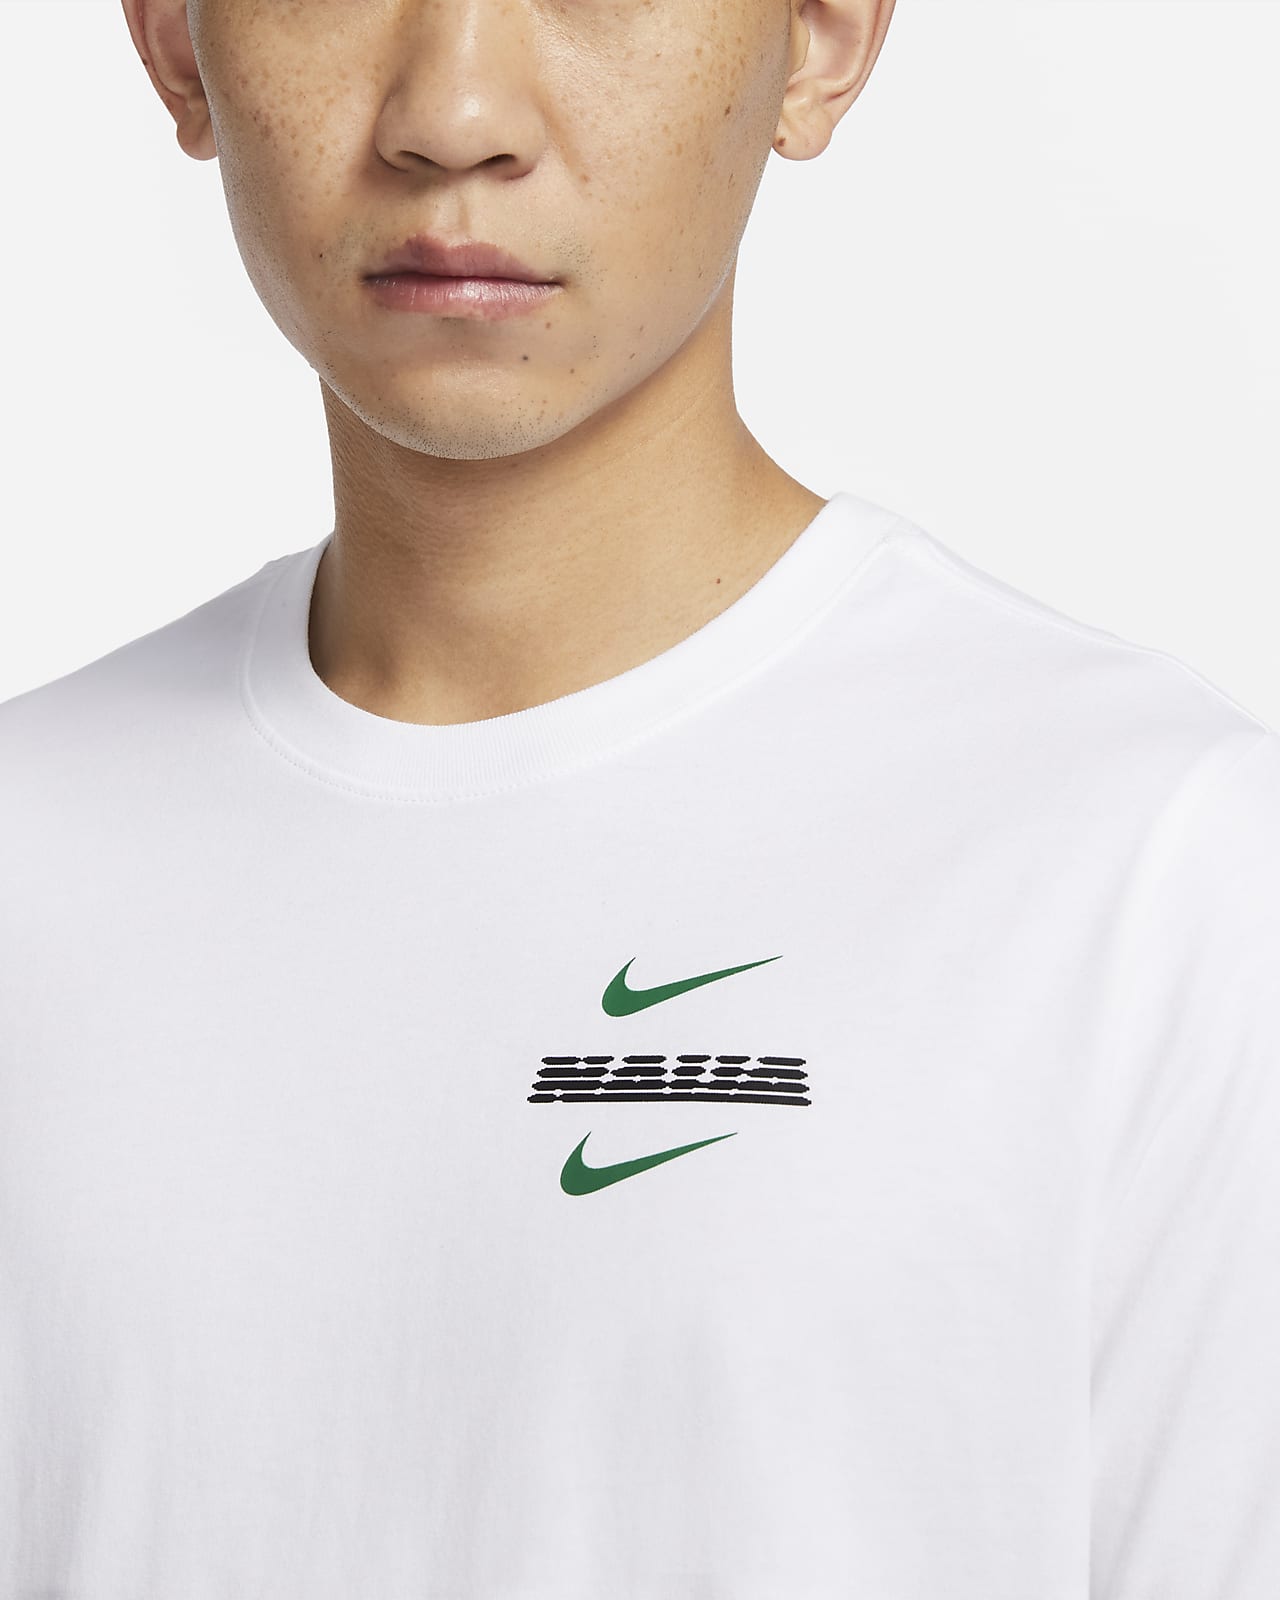 Men's Nike Voice T-Shirt.